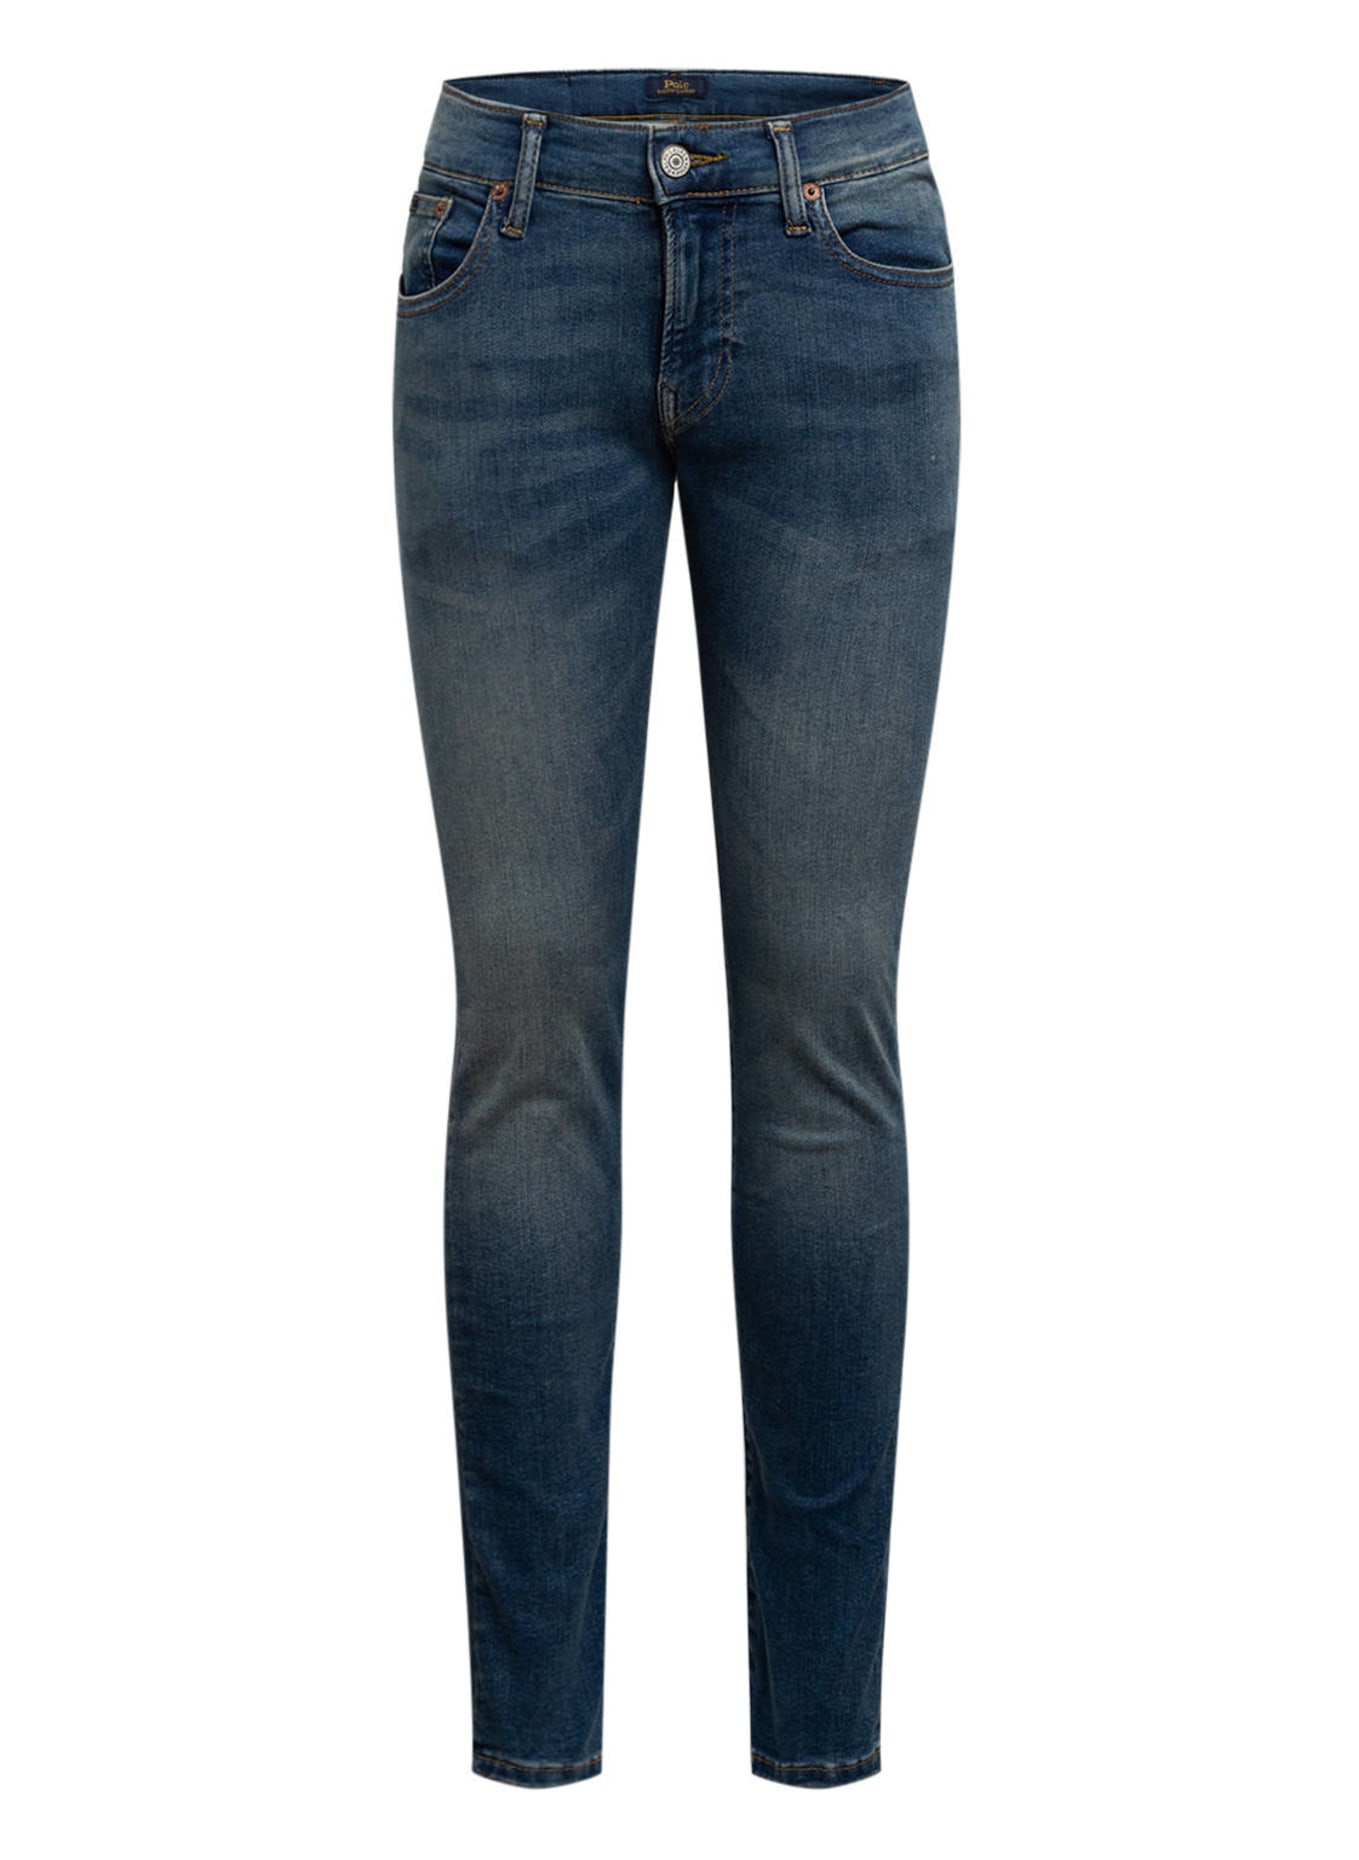 POLO RALPH LAUREN Jeans ELDRIDGE Skinny Fit, Farbe: 001 AIDEN WASH (Bild 1)